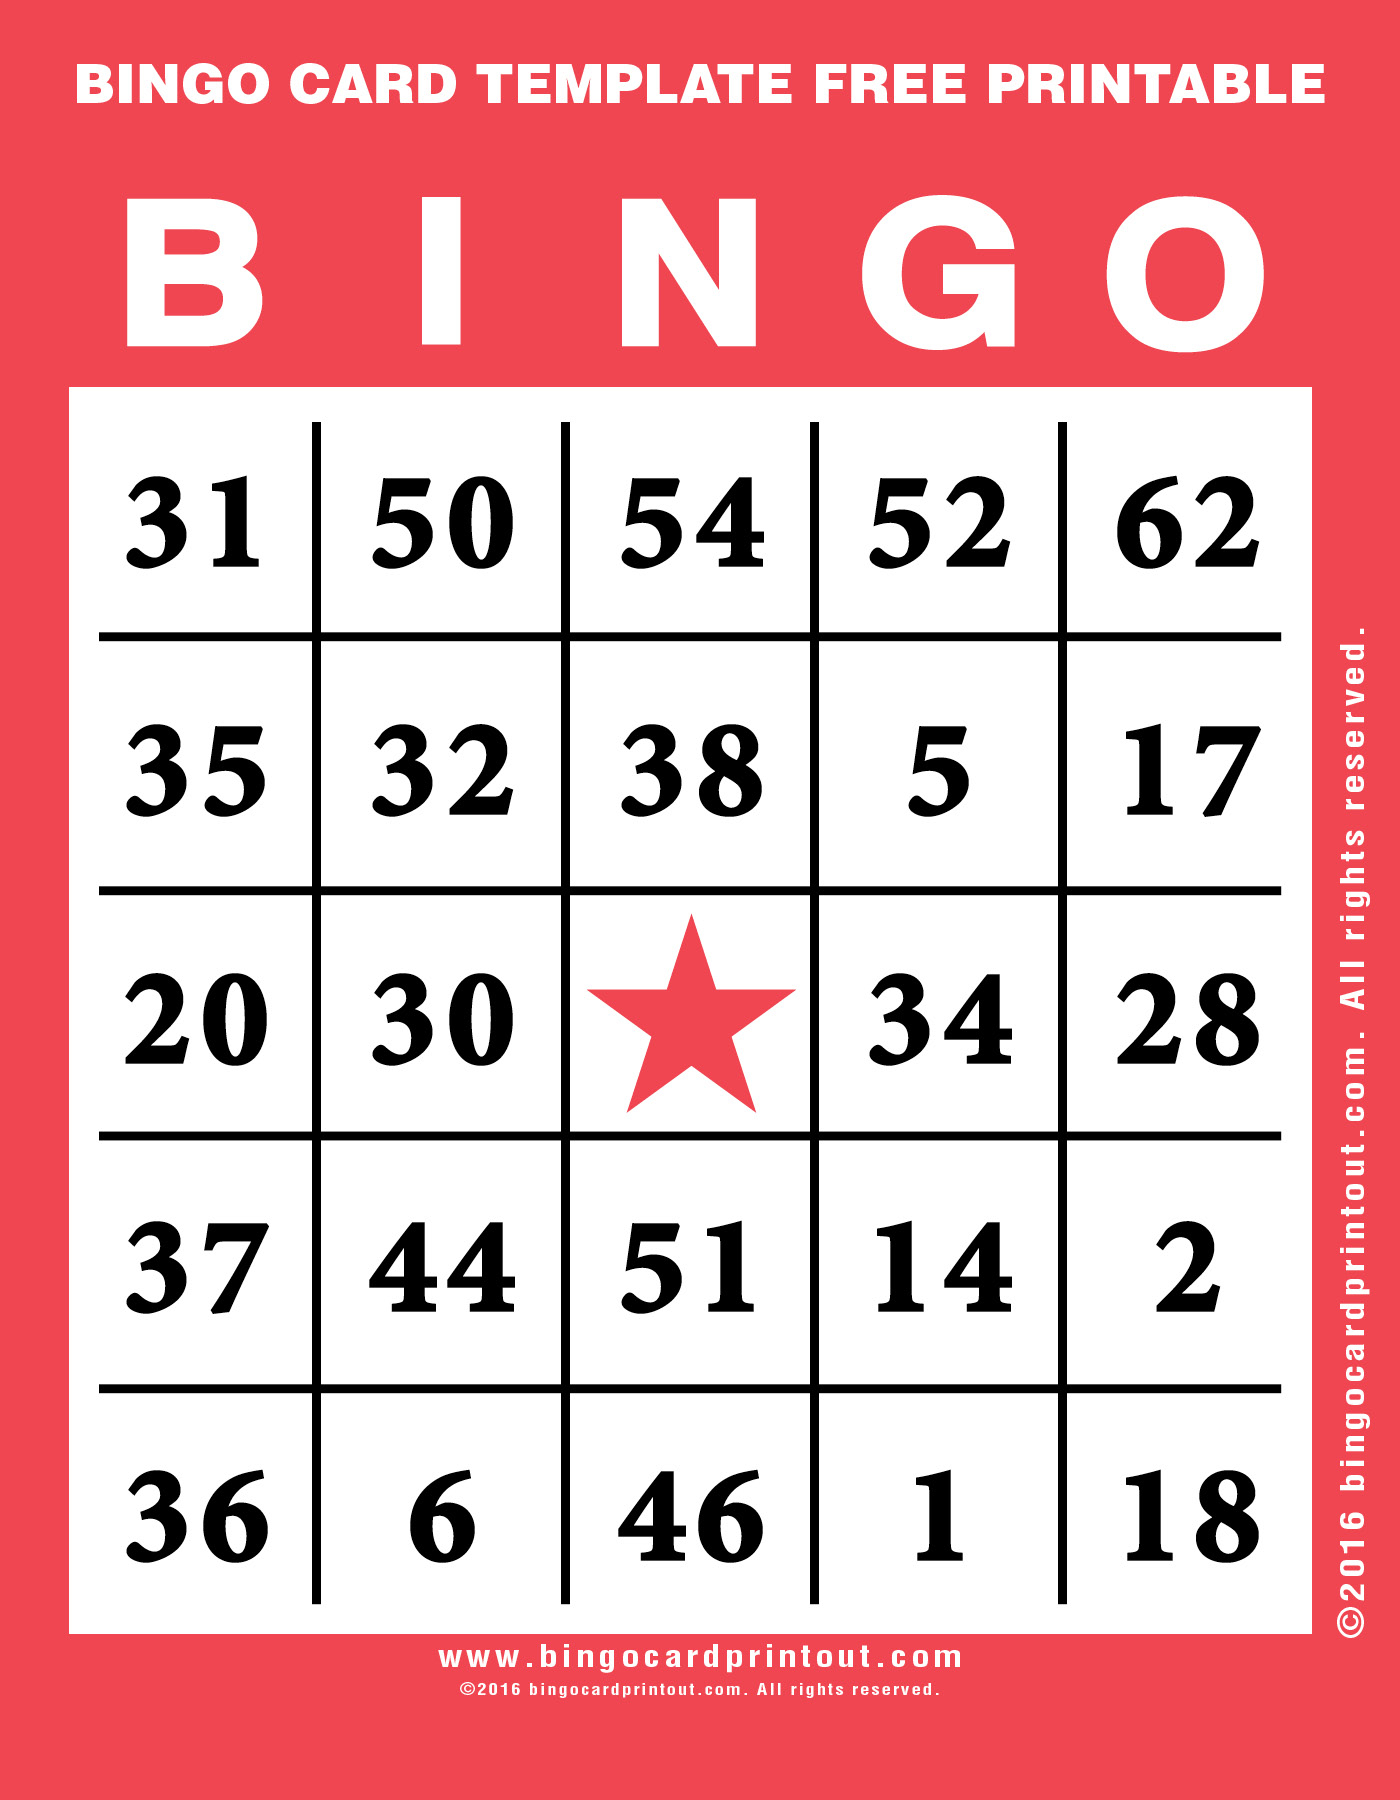 Bingo Card Template Free Printable BingoCardPrintout